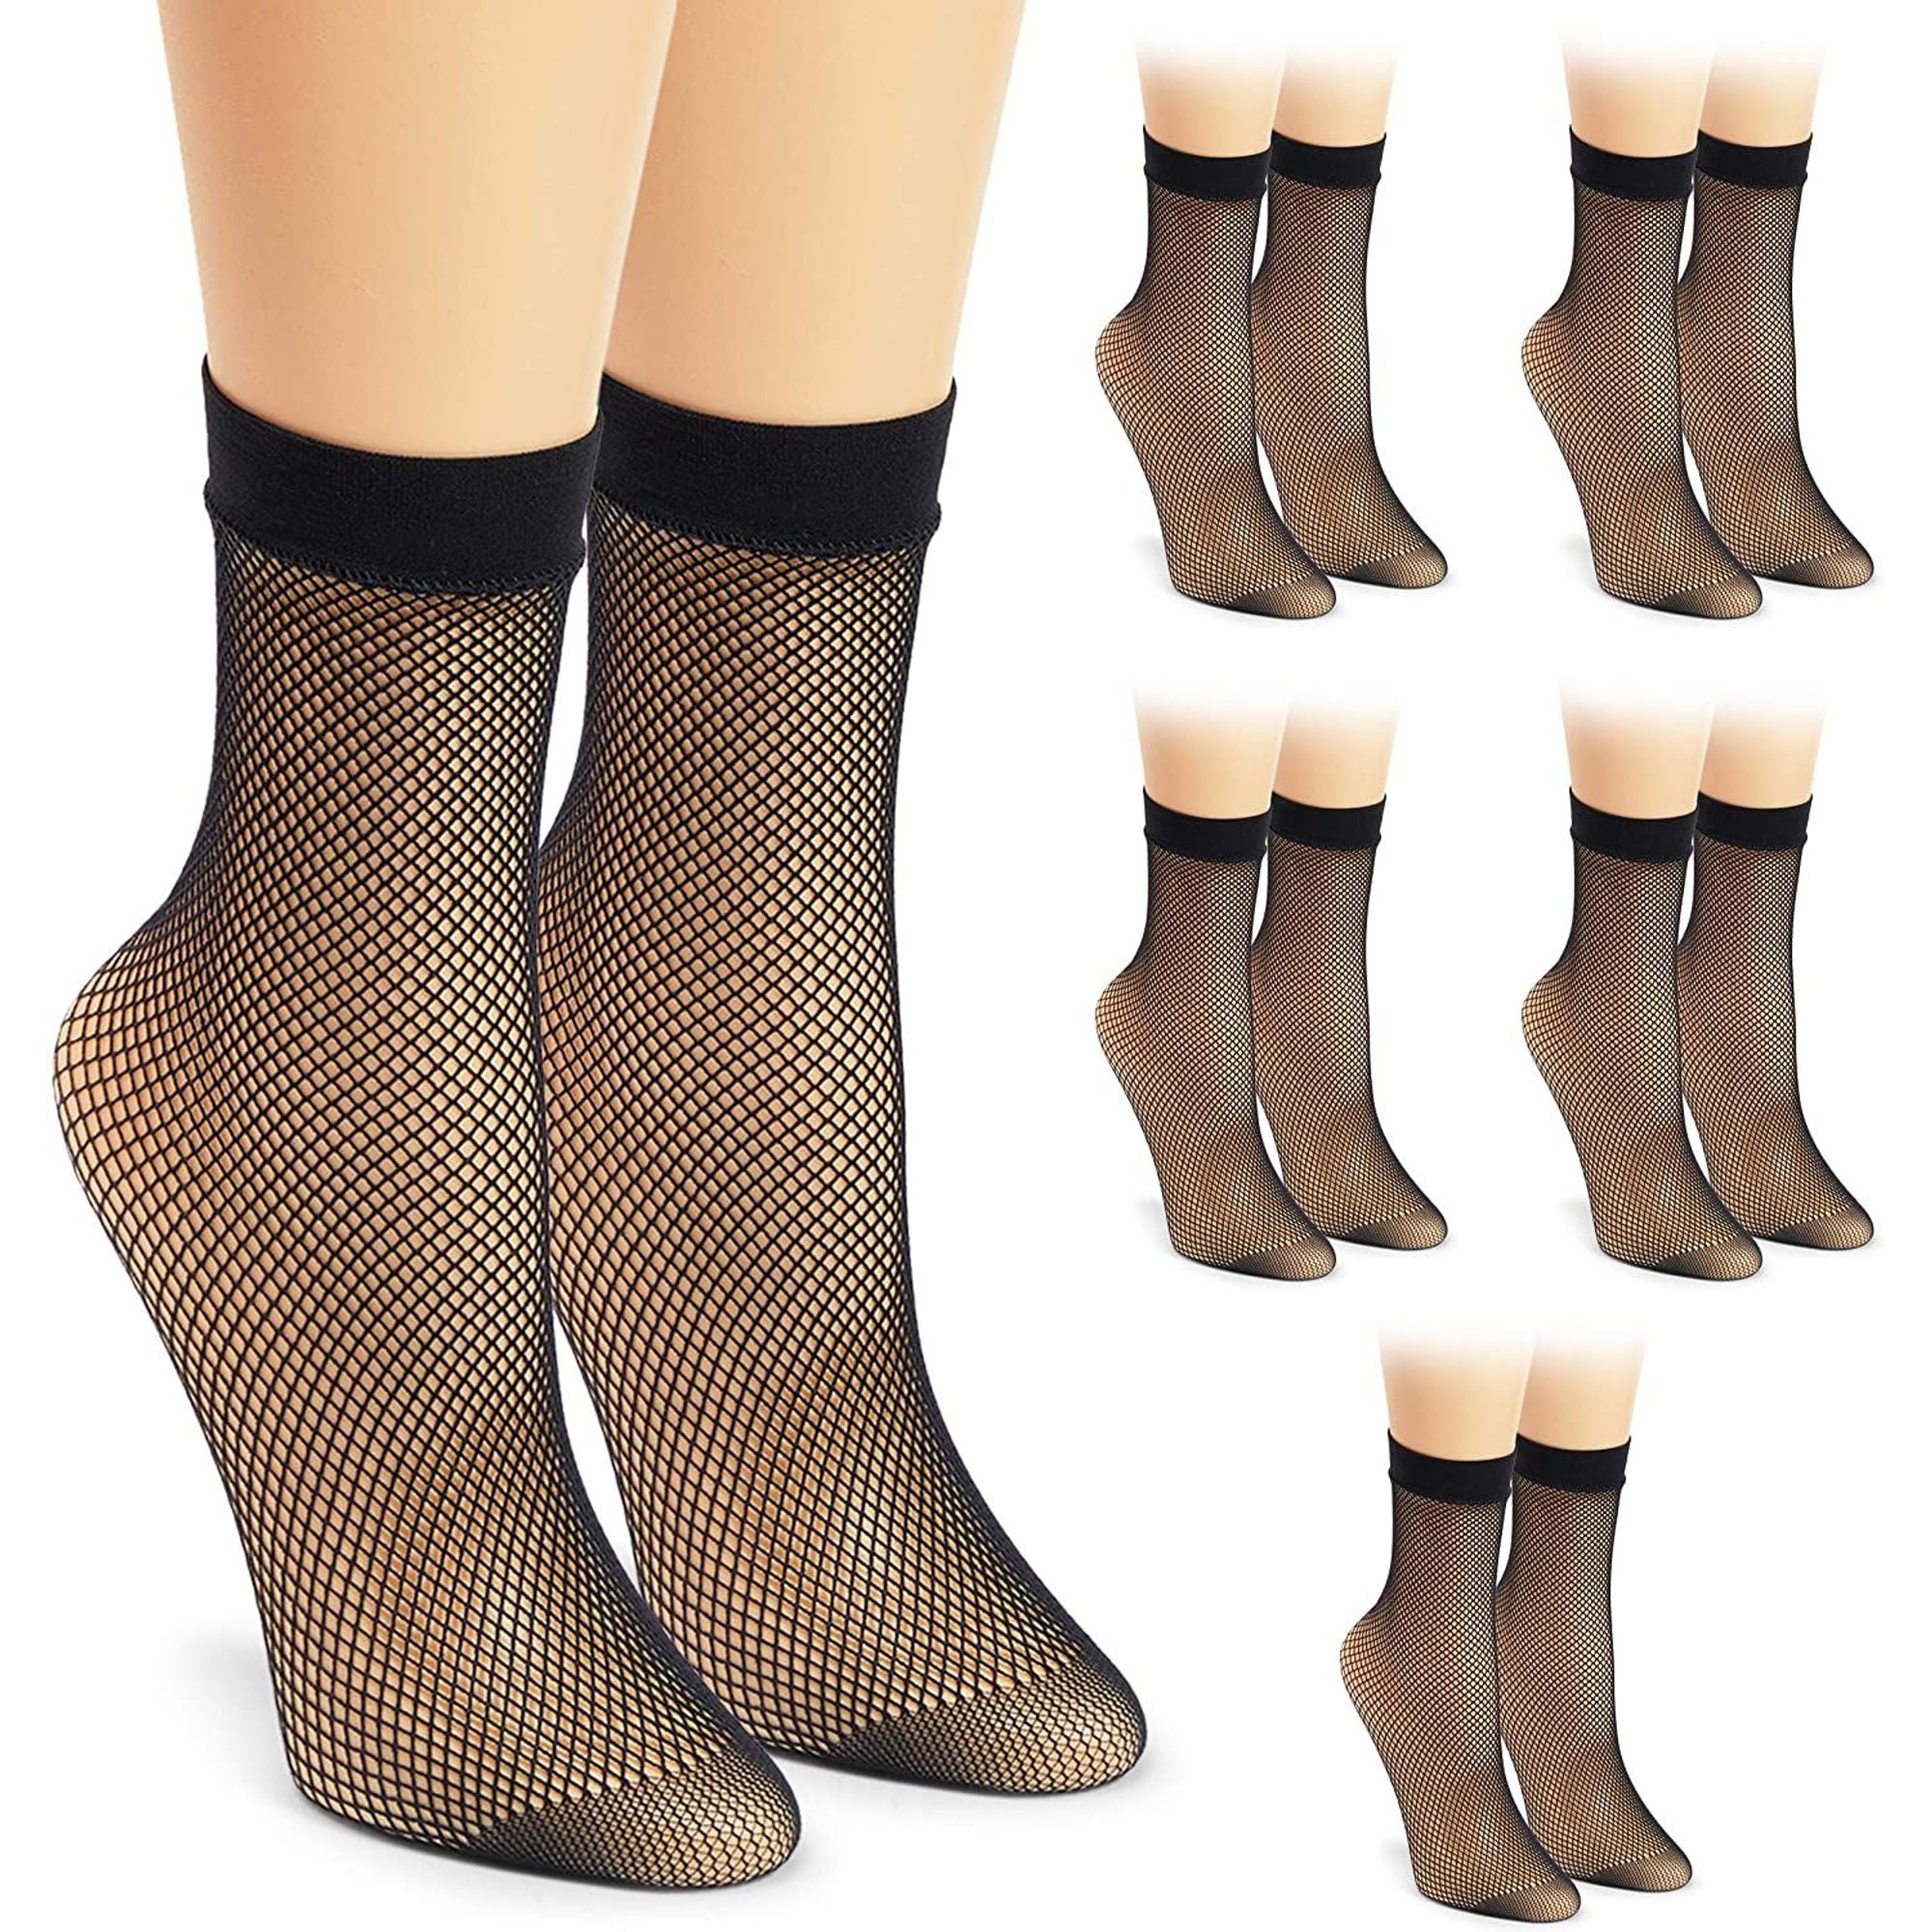 Zodaca 6Pair Black Ankle High Tight Fishnet Socks M